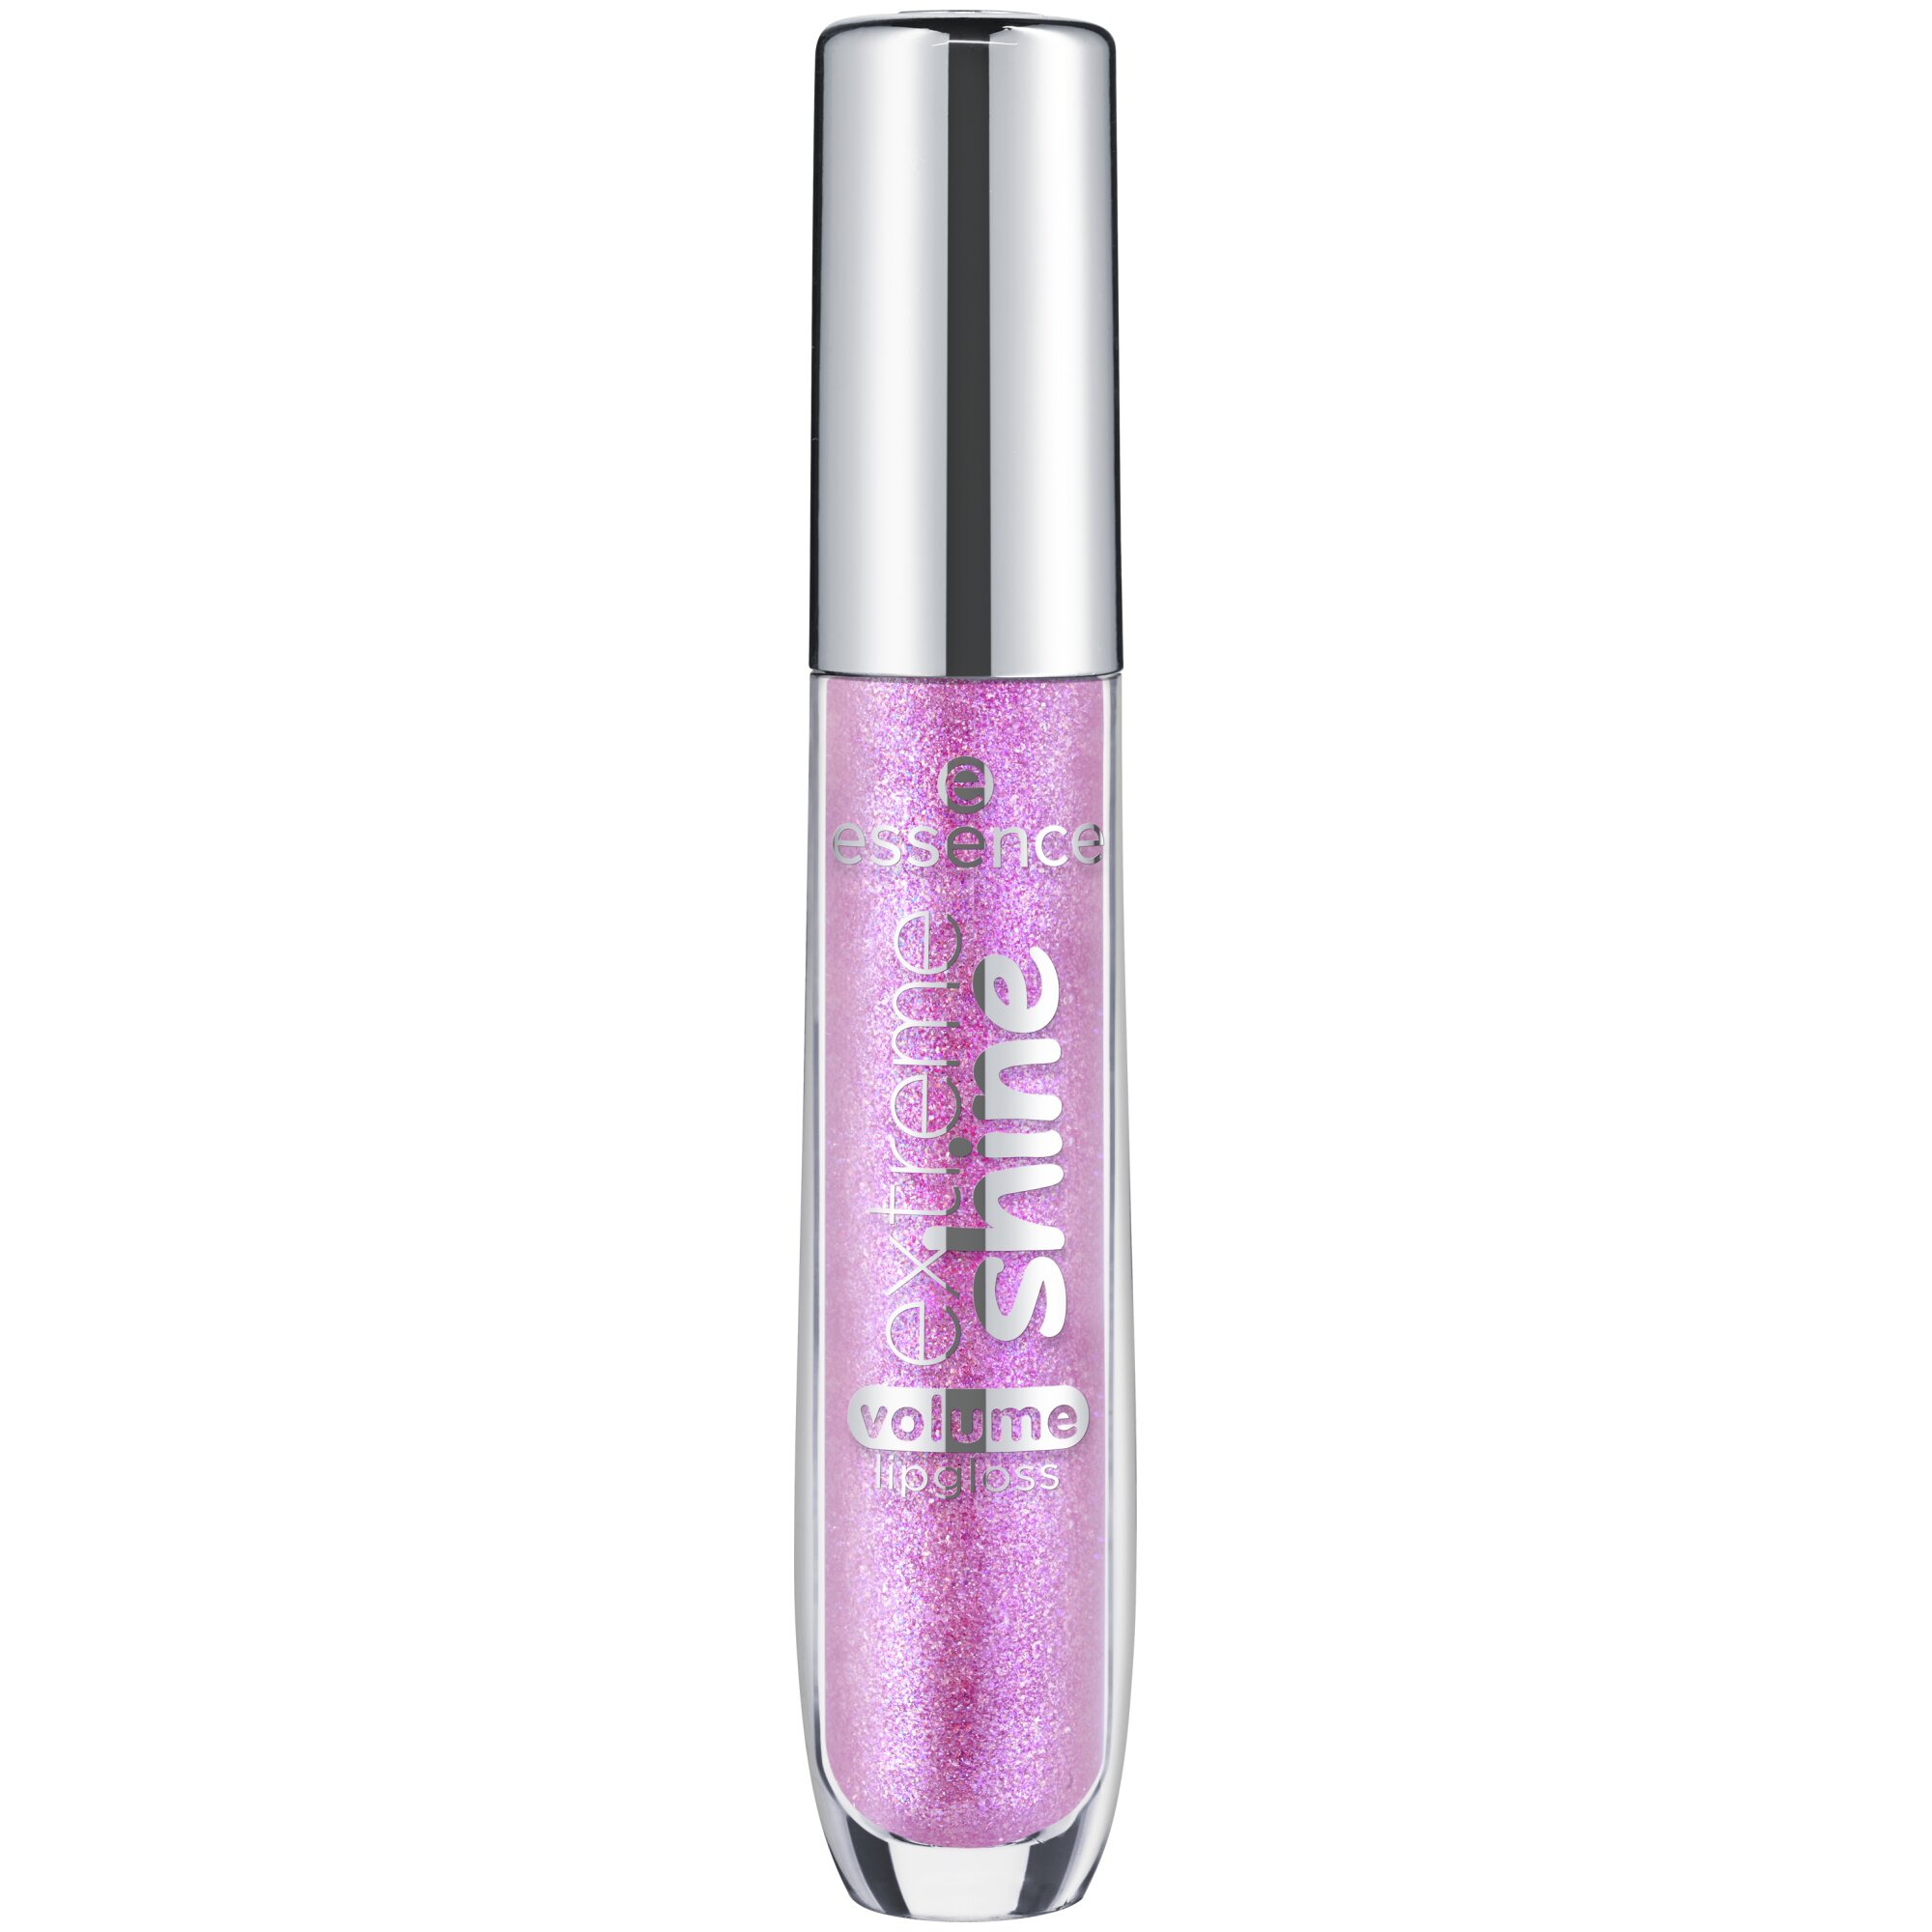 Luciu de buze extreme Shine Volume, 10 - Sparkling Purple, 5 ml, Essence